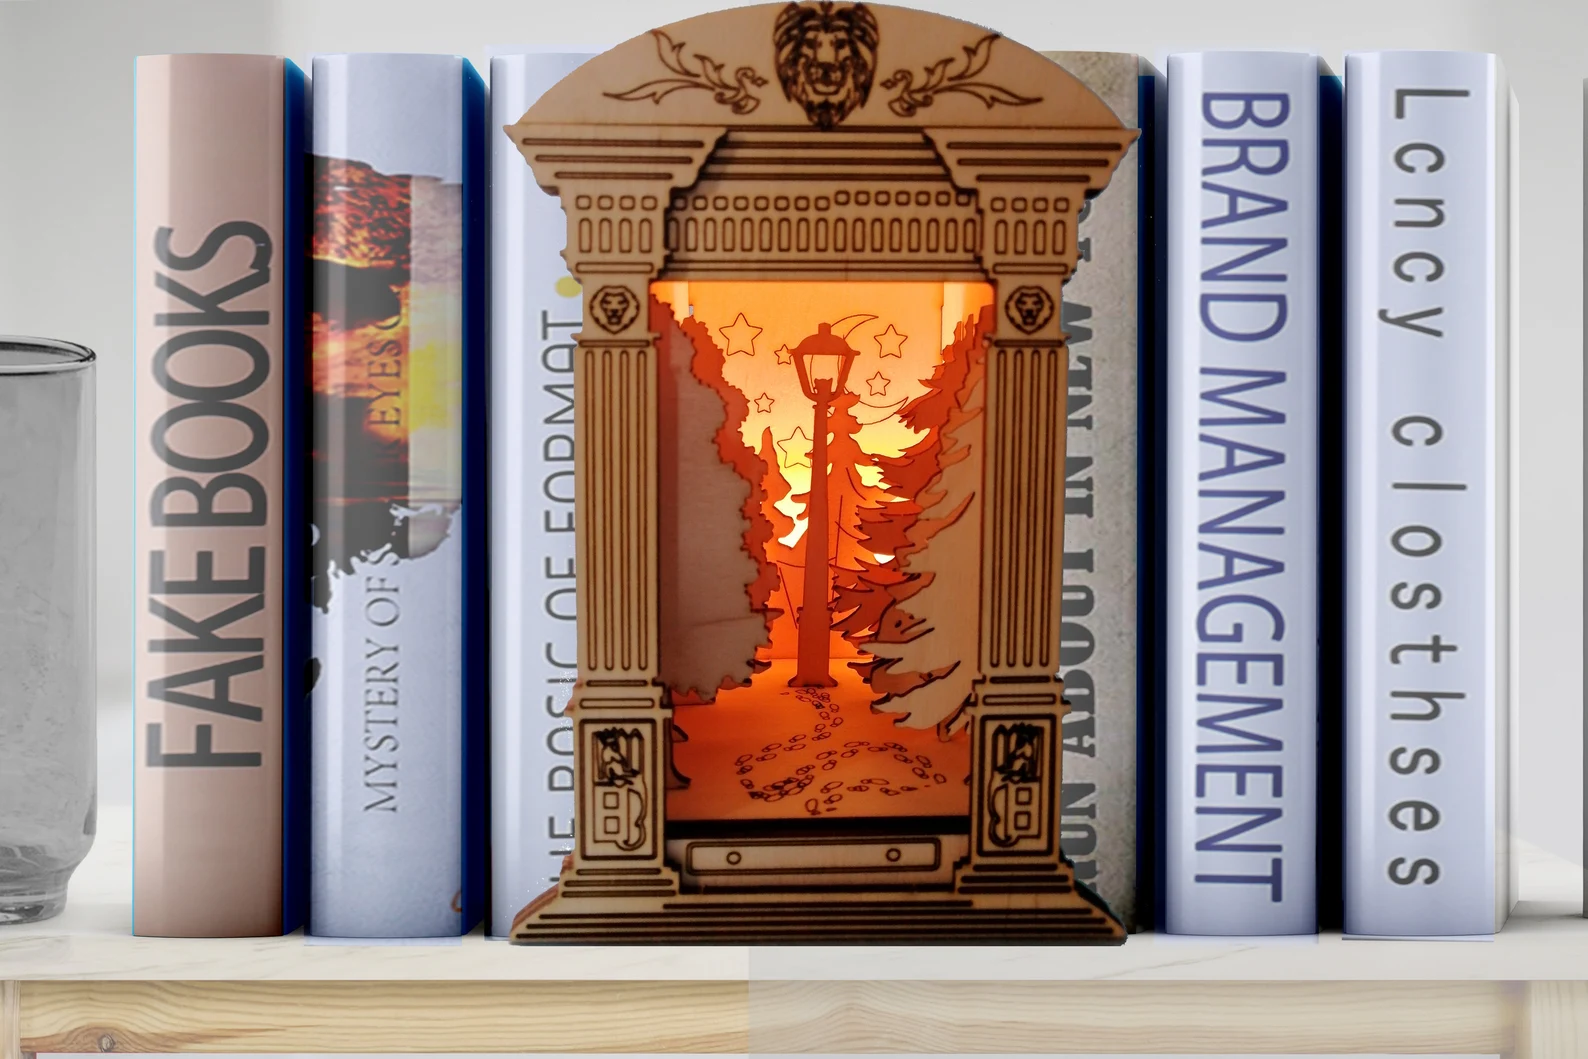 Narnia lampost book nook